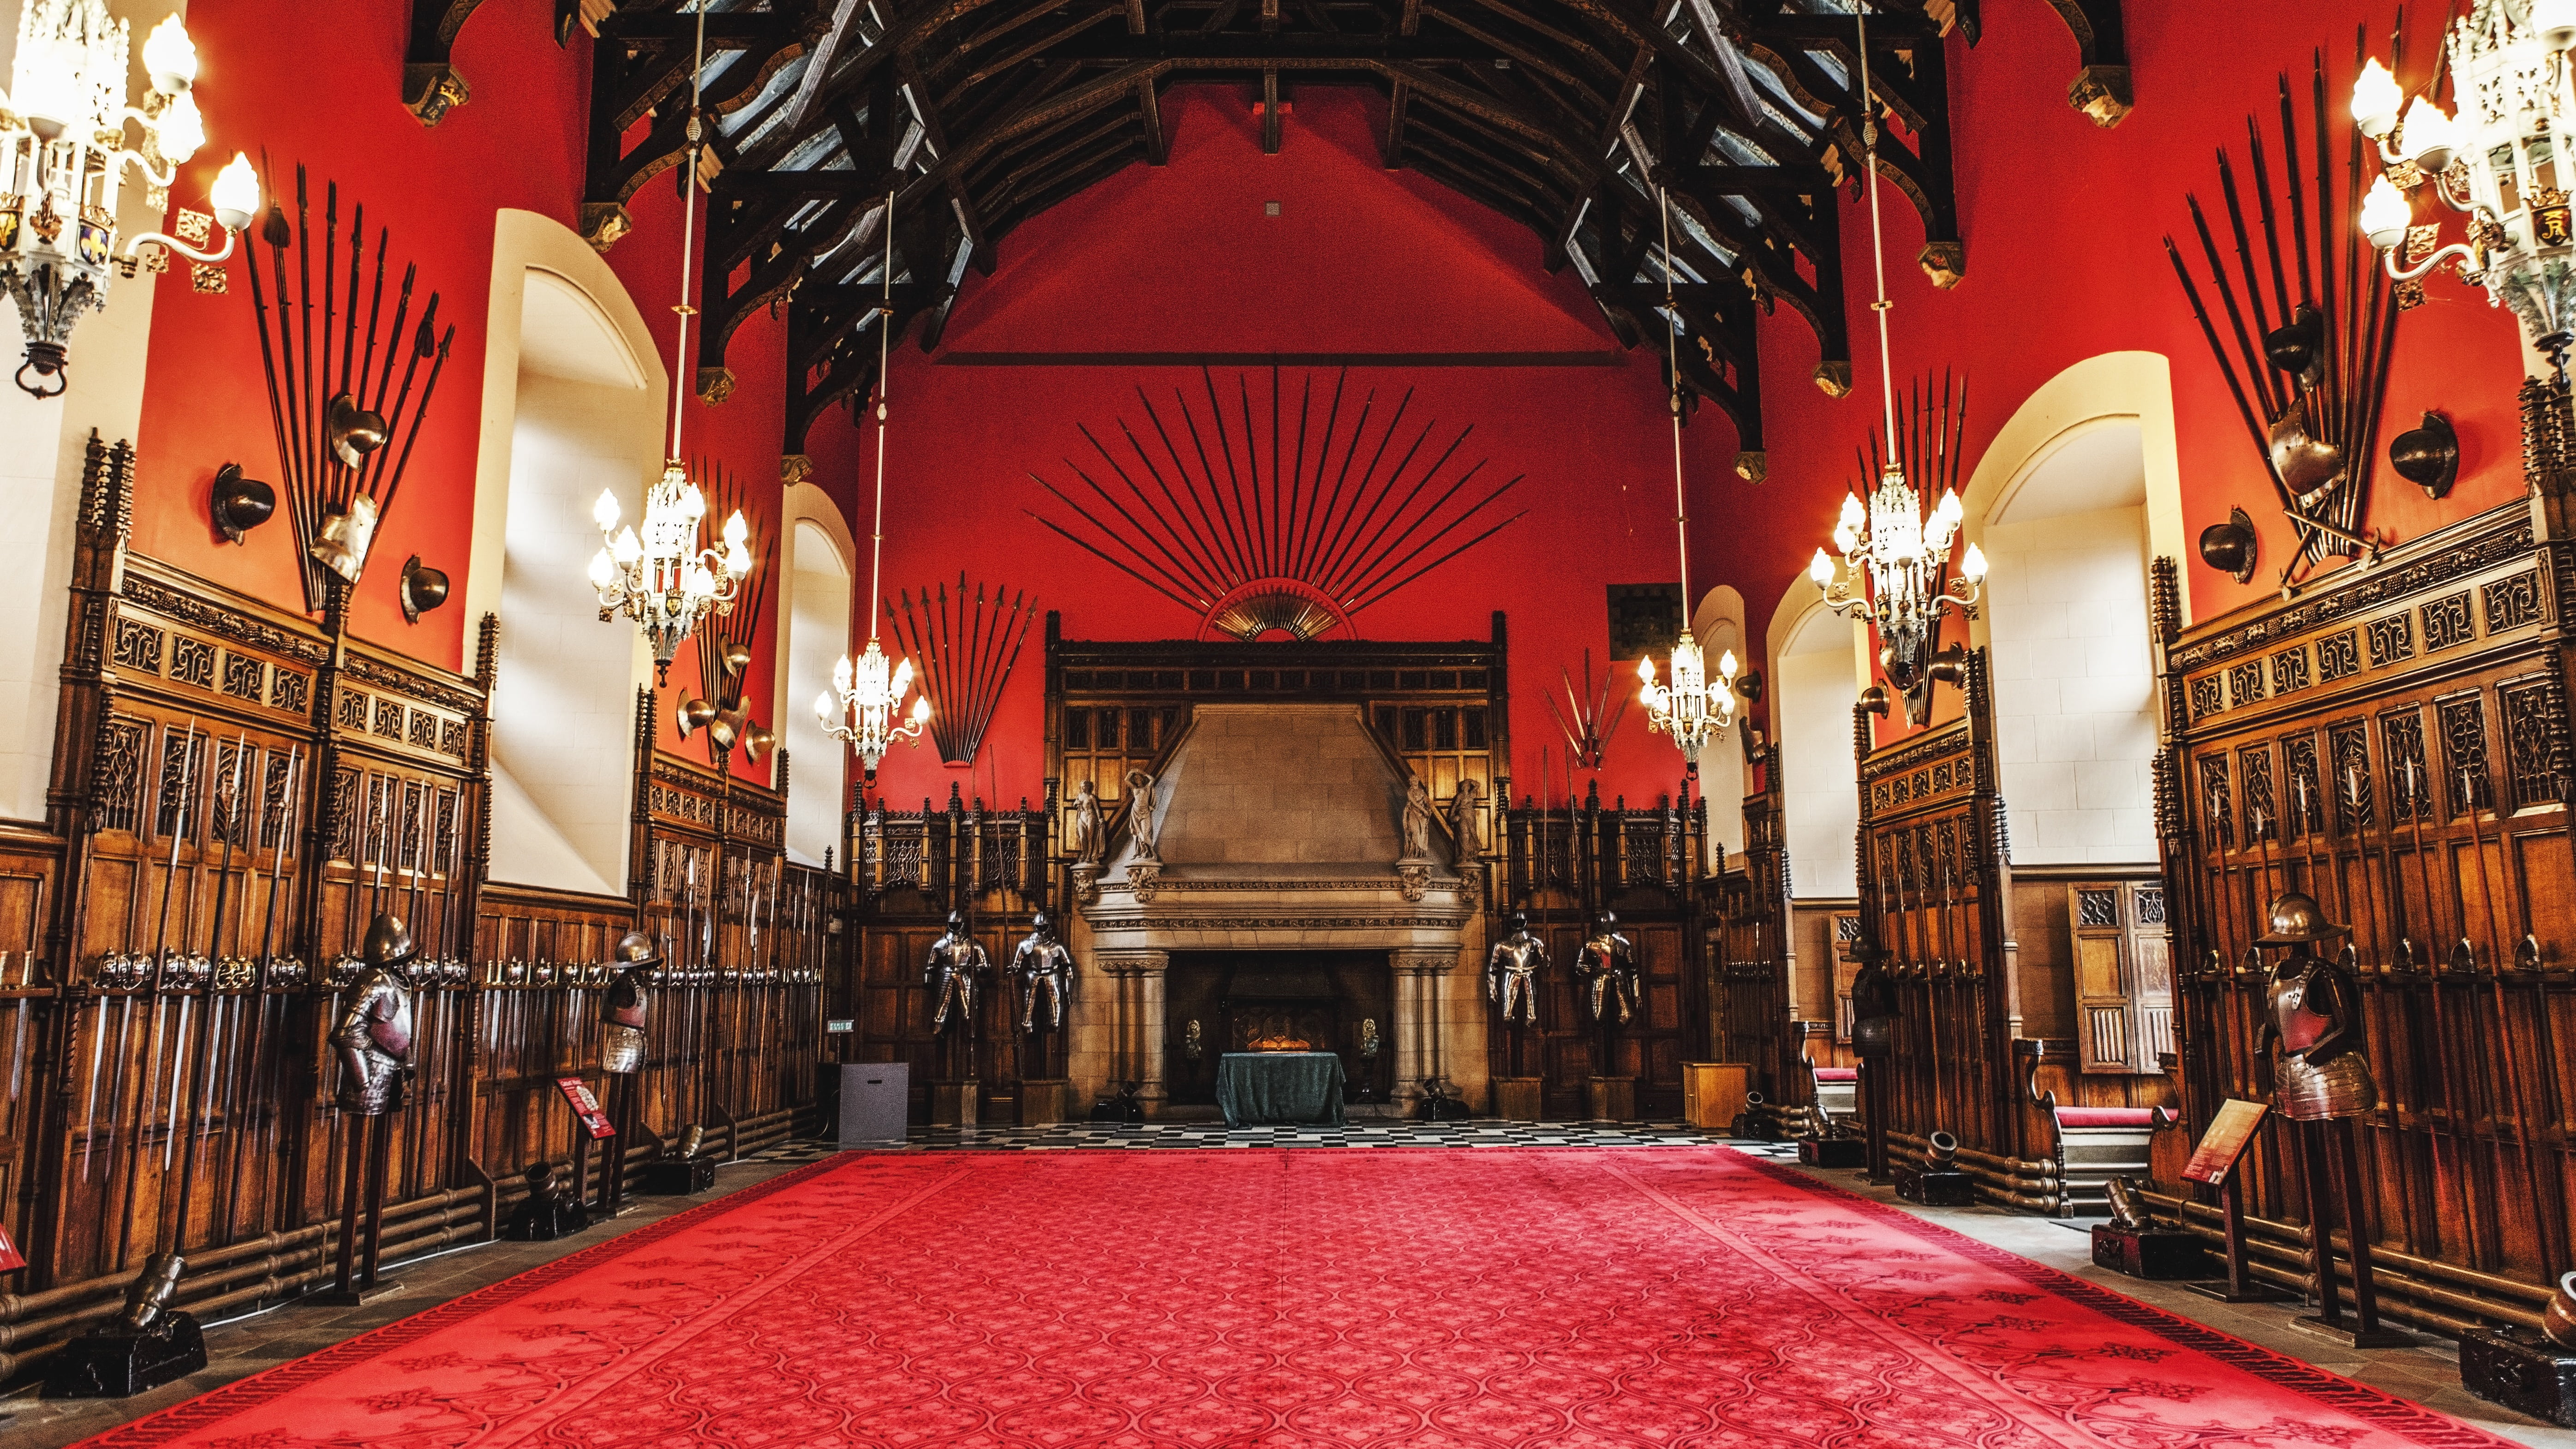 red and black building interior, scotland, edinburgh, edinburgh castle